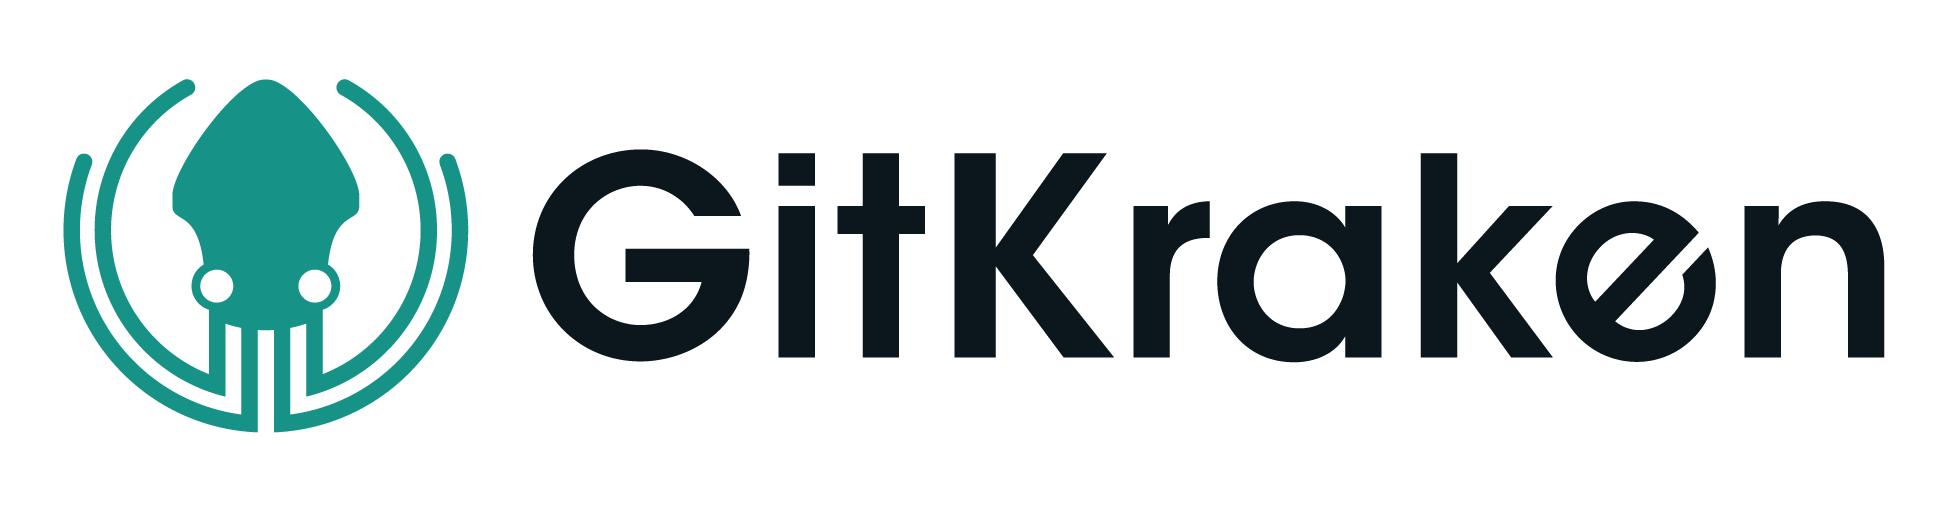 gitkraken-logo-dark-hz.png